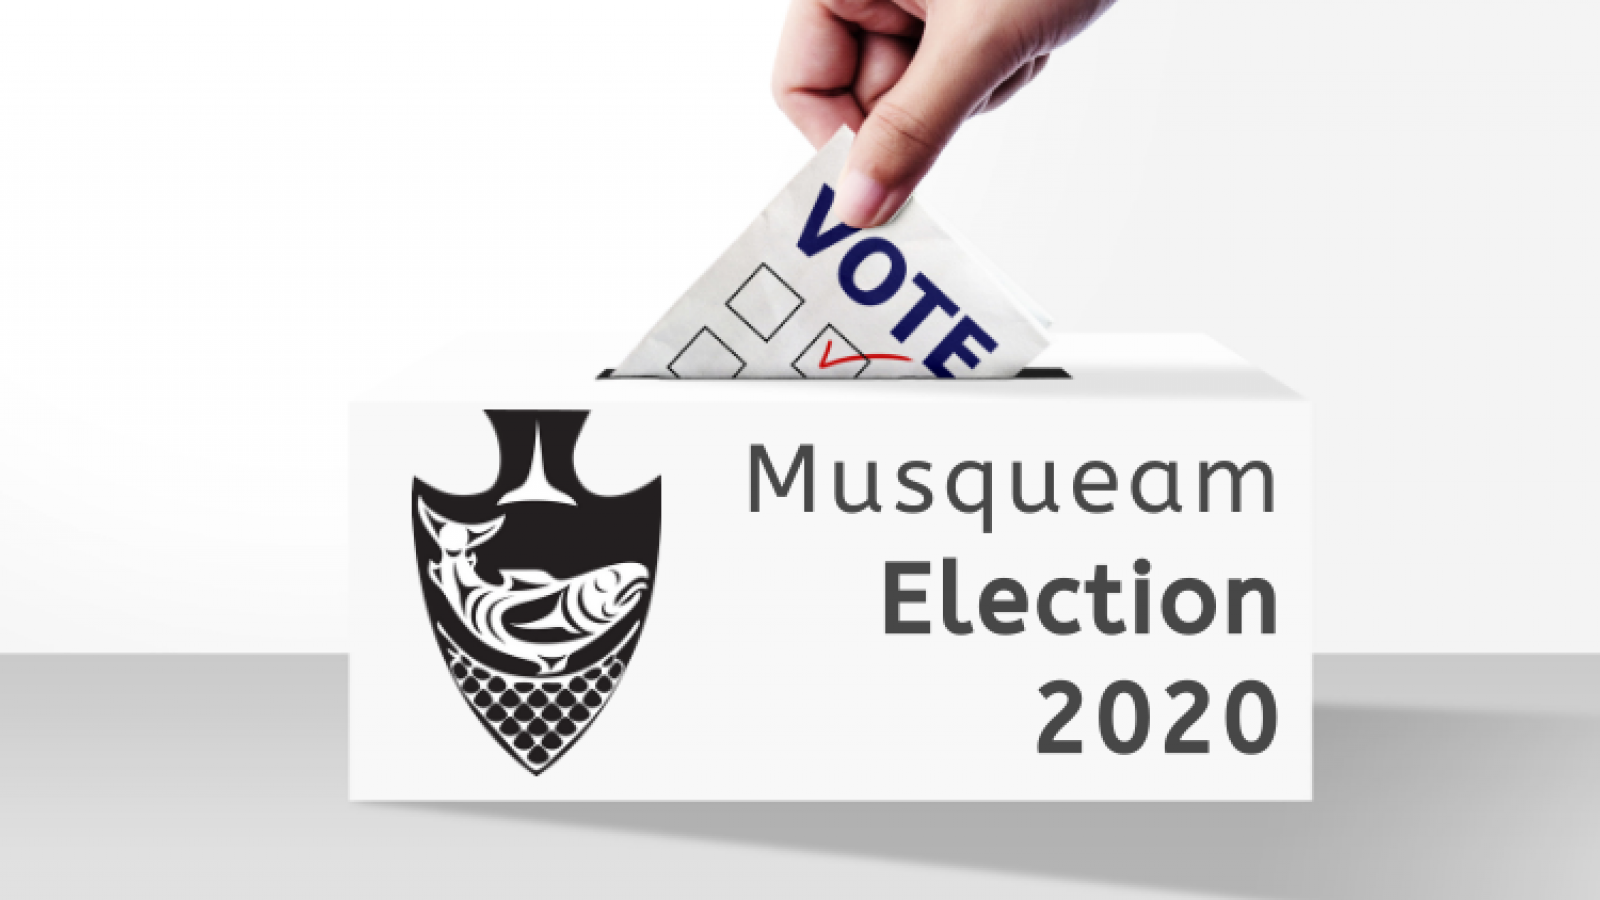 musqueam election 2020